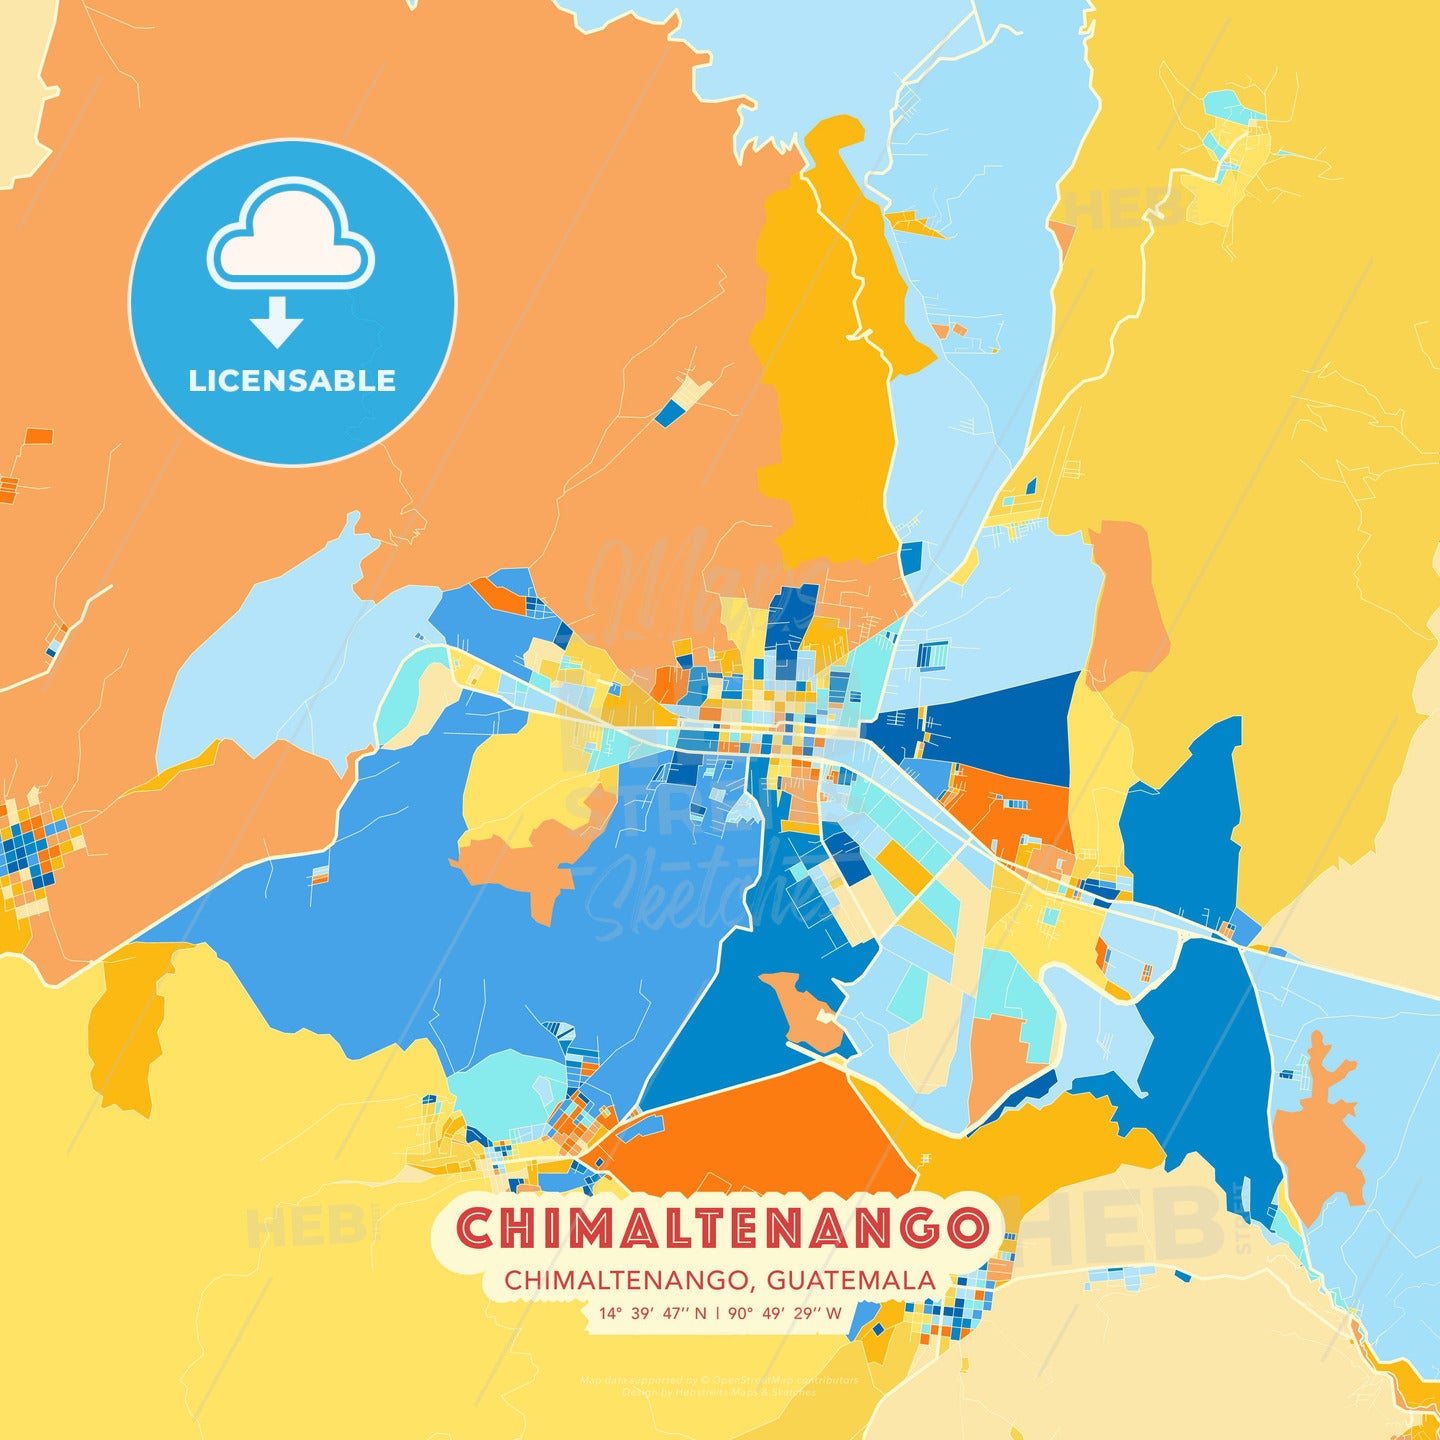 Chimaltenango, Chimaltenango, Guatemala, map - HEBSTREITS Sketches